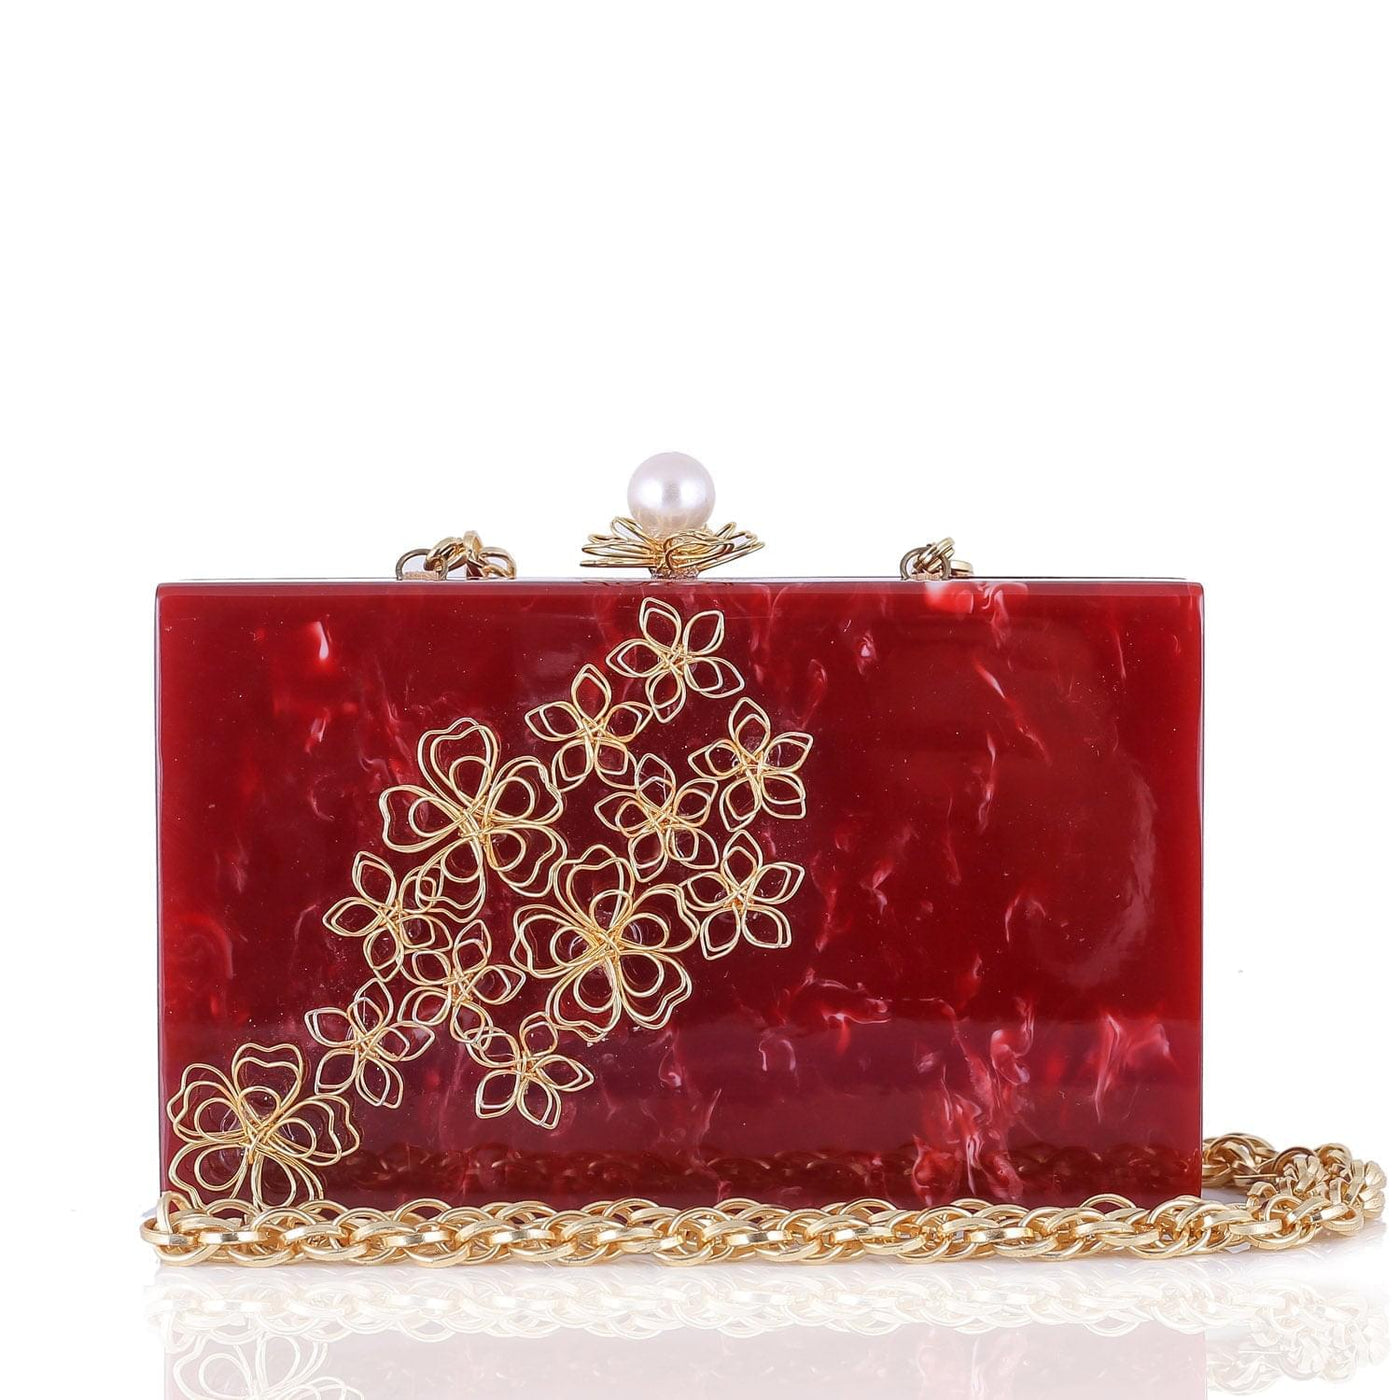 Dahlia Red Clutch - Women's evening clutch bag